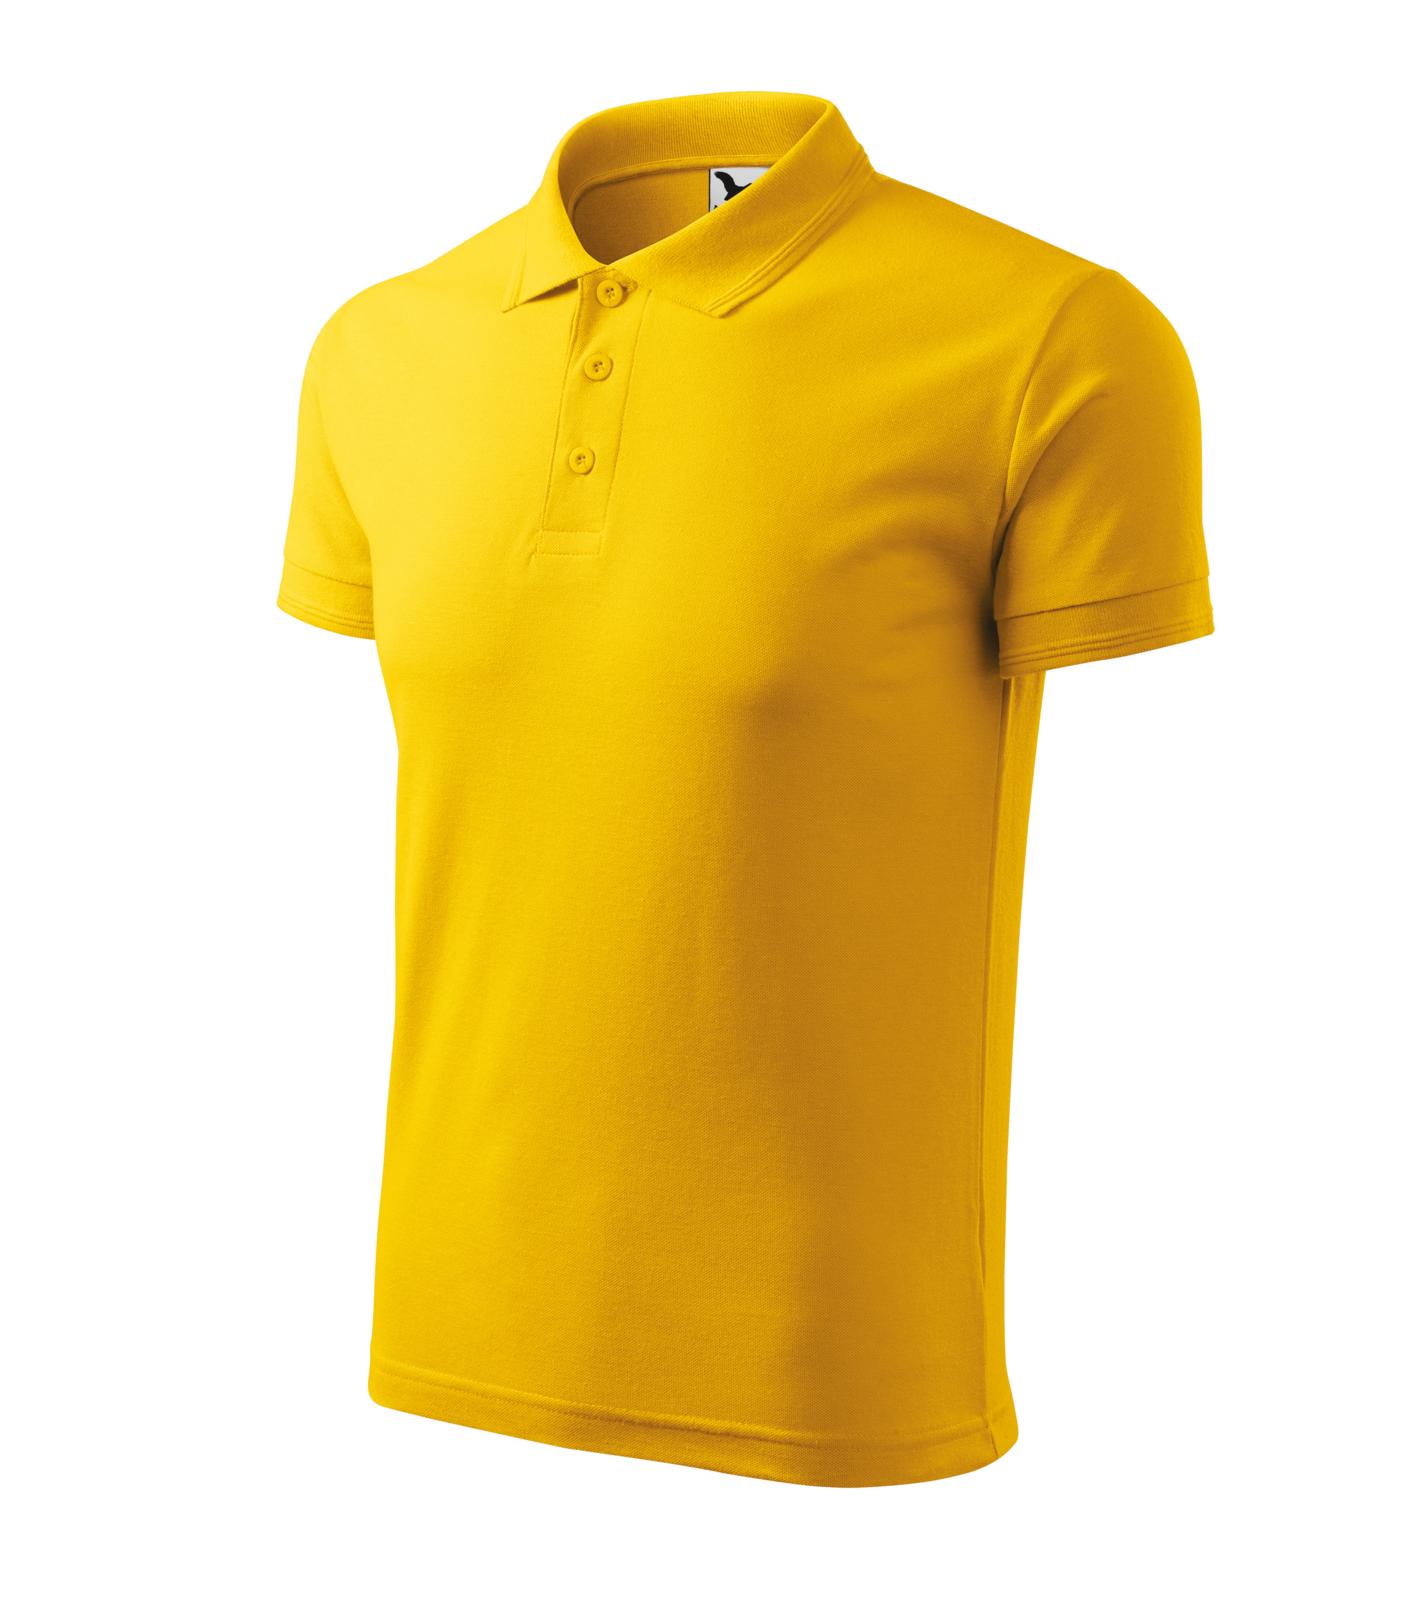 Pique Polo Polokošile pánská Barva: žlutá, Velikost: M